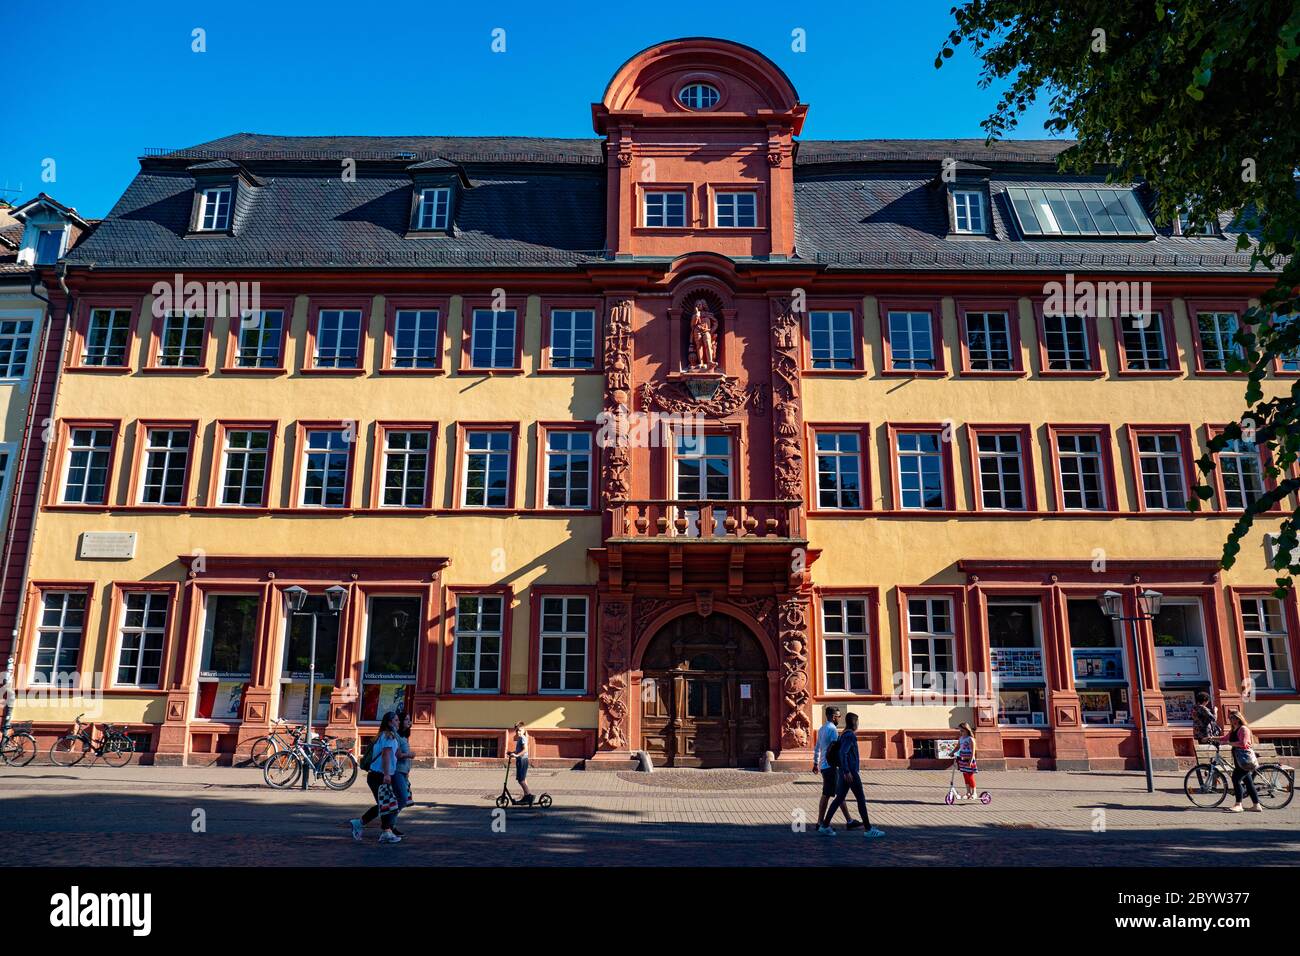 University of Heidelberg - Altstadt Campus in the city center - HEIDELBERG, GERMANY - MAY 28, 2020 Stock Photo